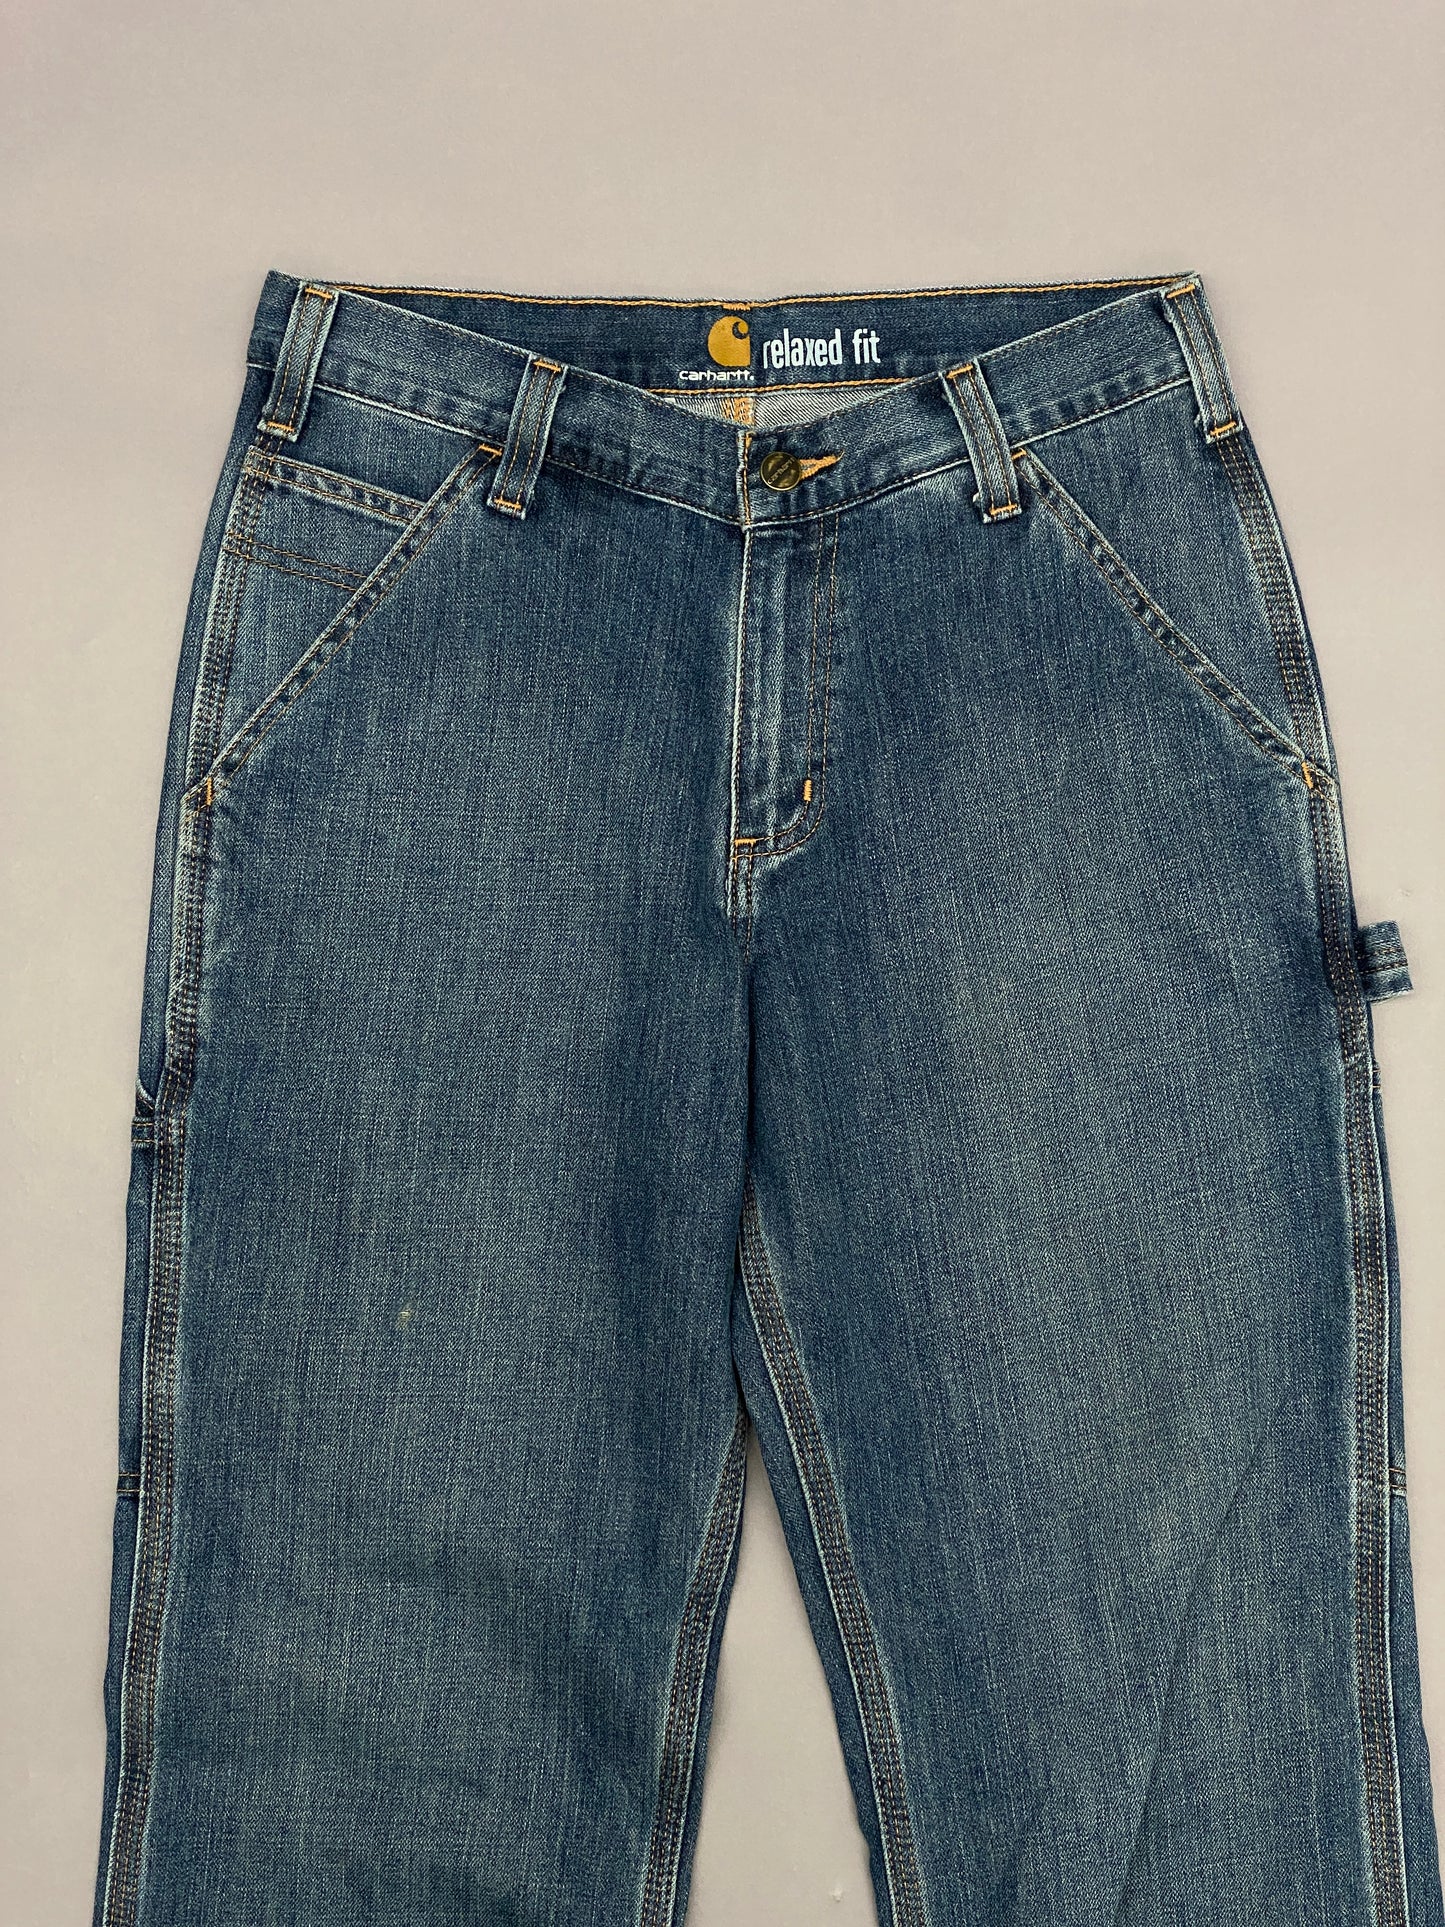 Carhartt Jeans Carpenter Pants - 30x30